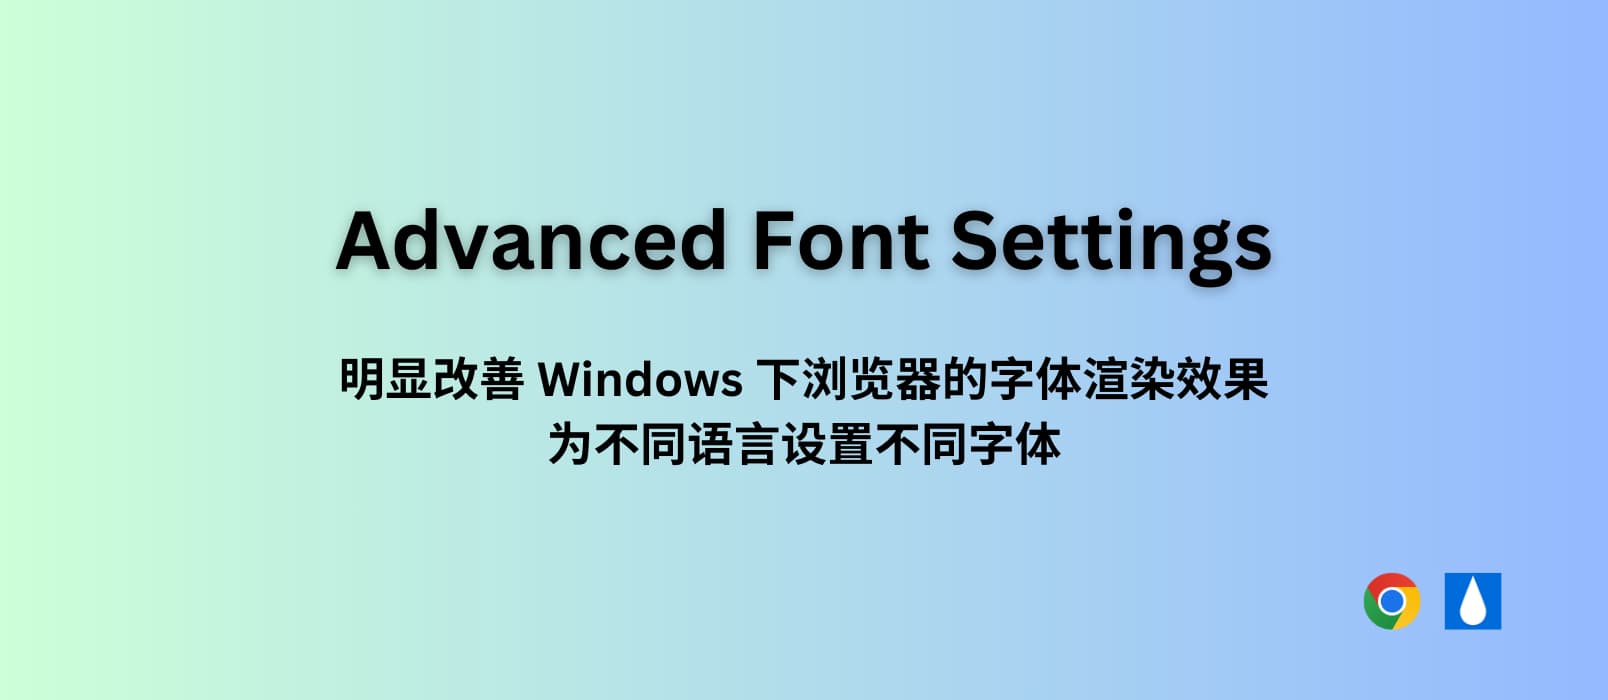 Advanced Font Settings – 明显改善 Windows 下浏览器的字体渲染效果，为不同语言设置不同字体[Chrome]